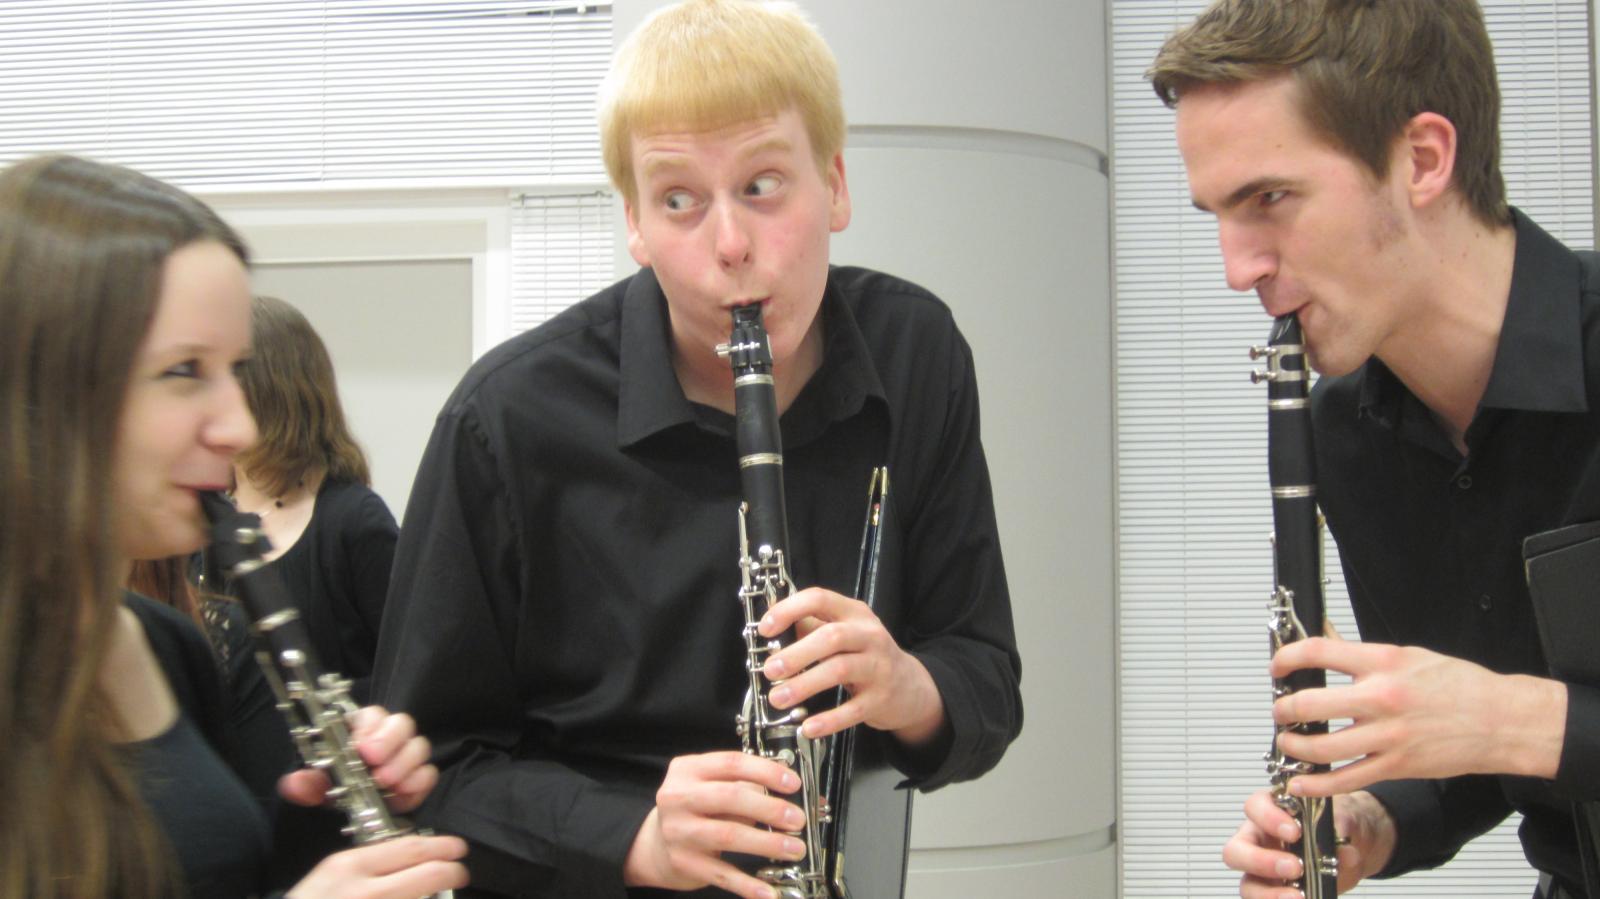 Clarinet students goofing around